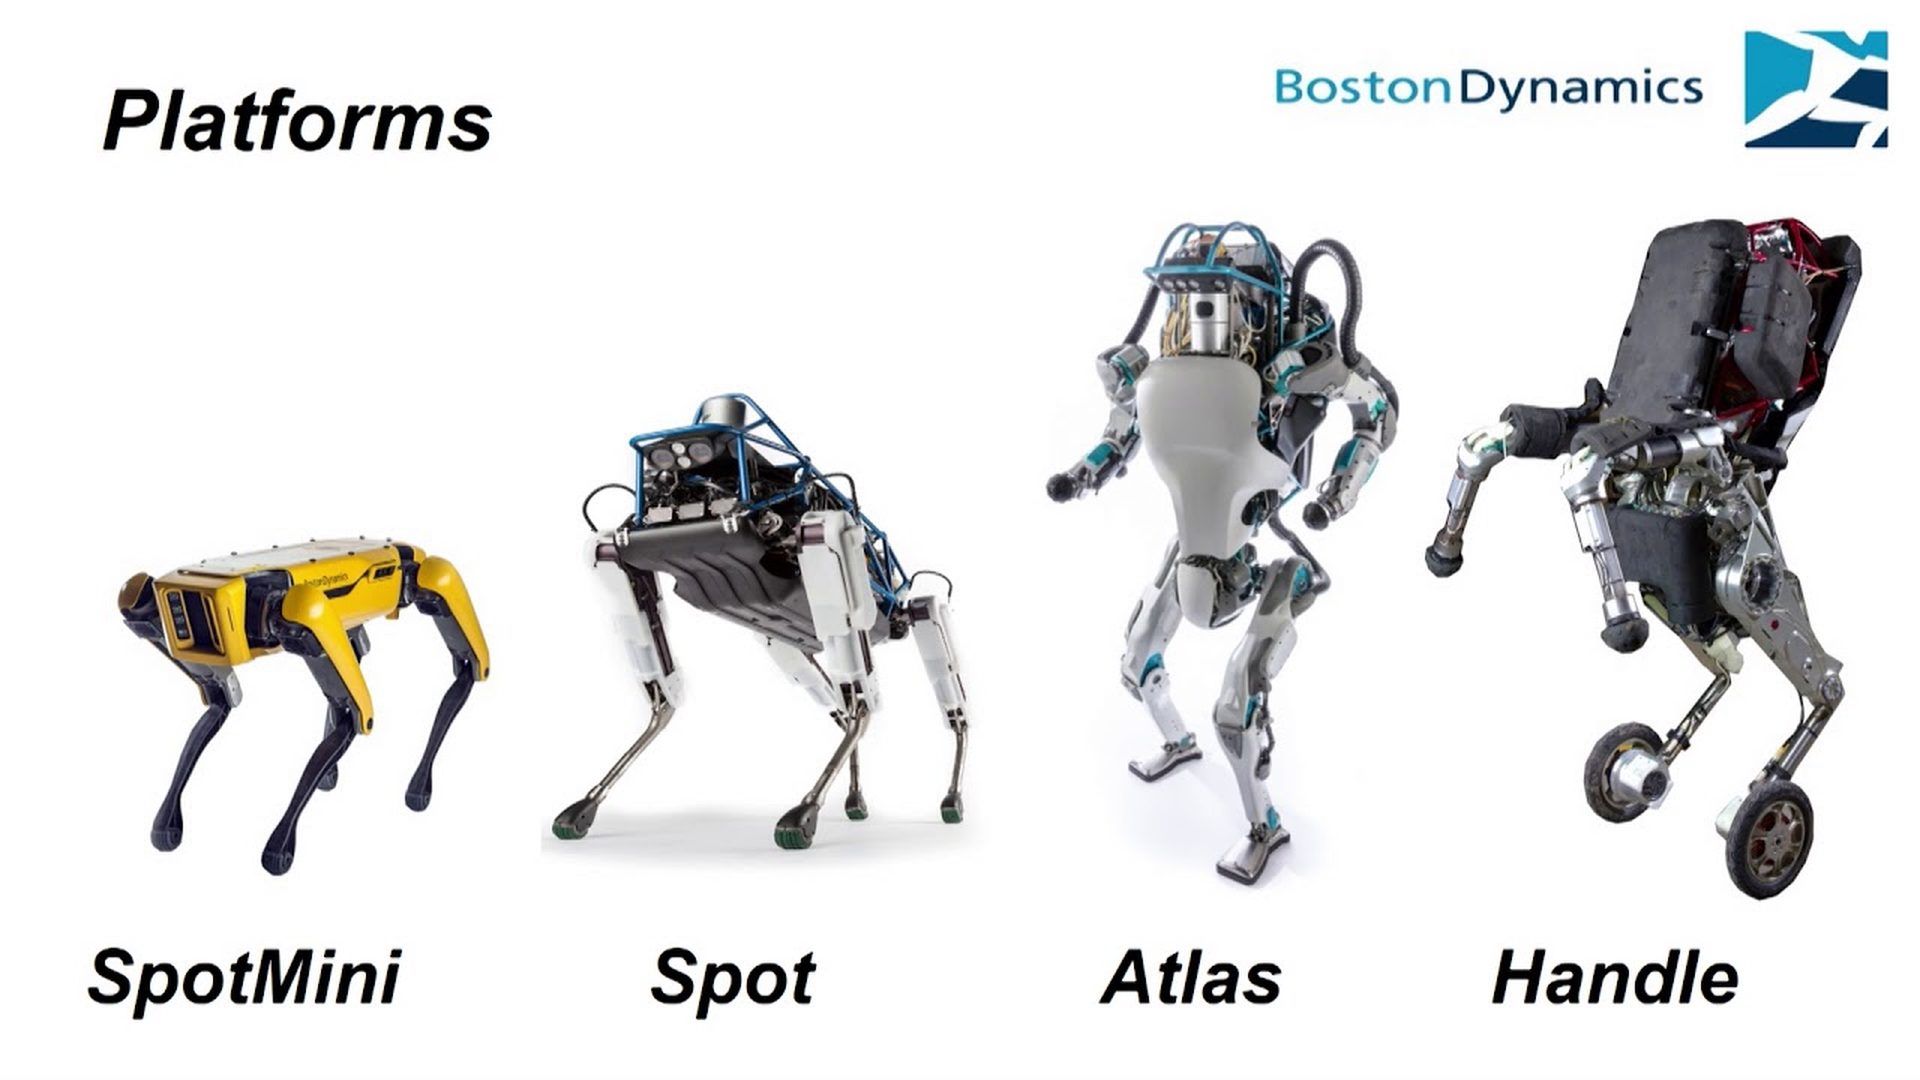 How does Boston Dynamics make money?